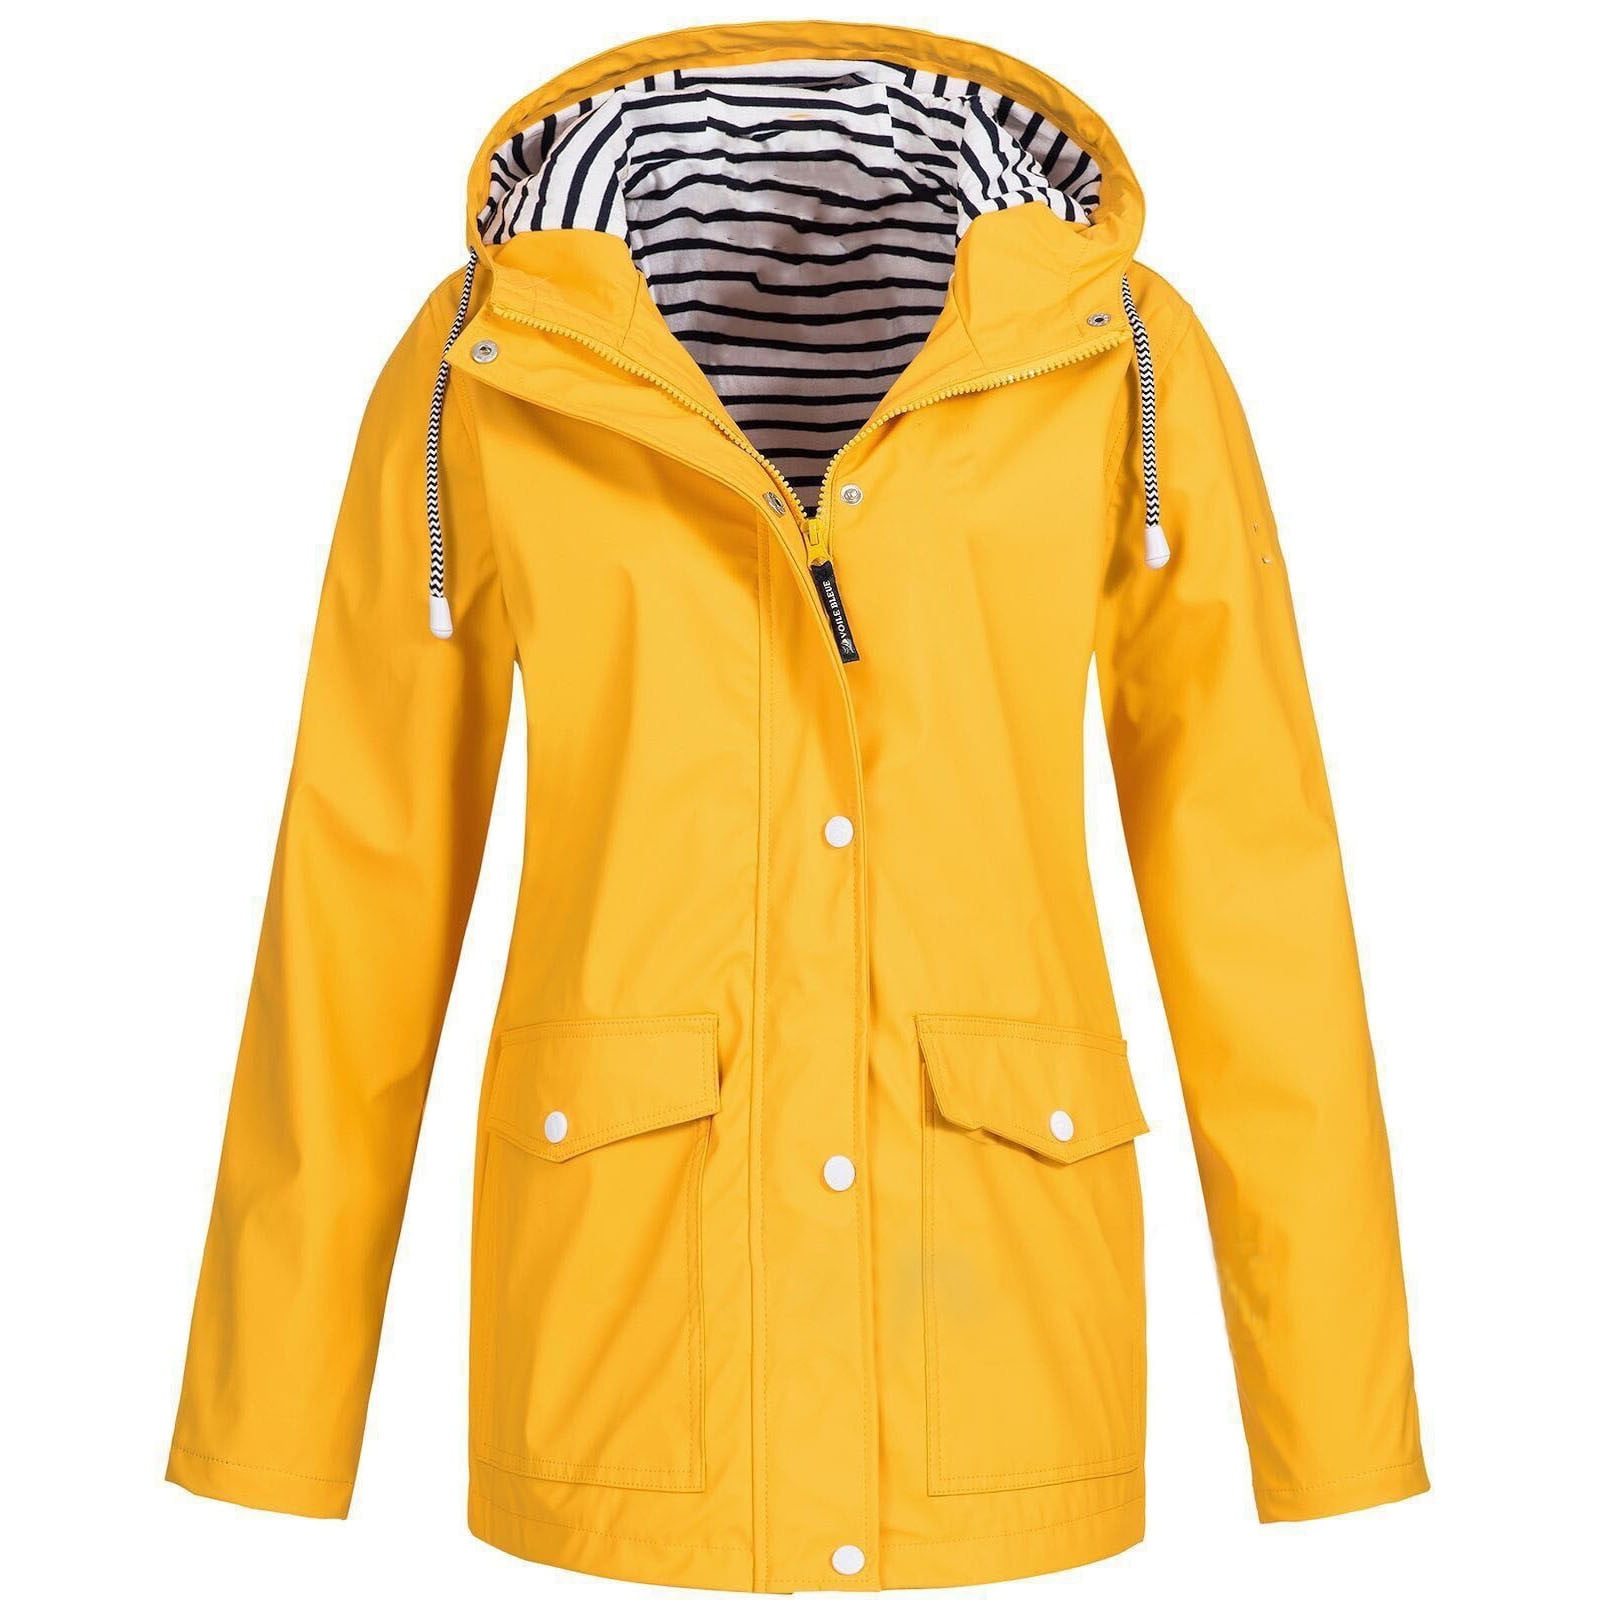 Coat Women Solid Rain Jacket Outdoor Plus Size Hooded Raincoat ...